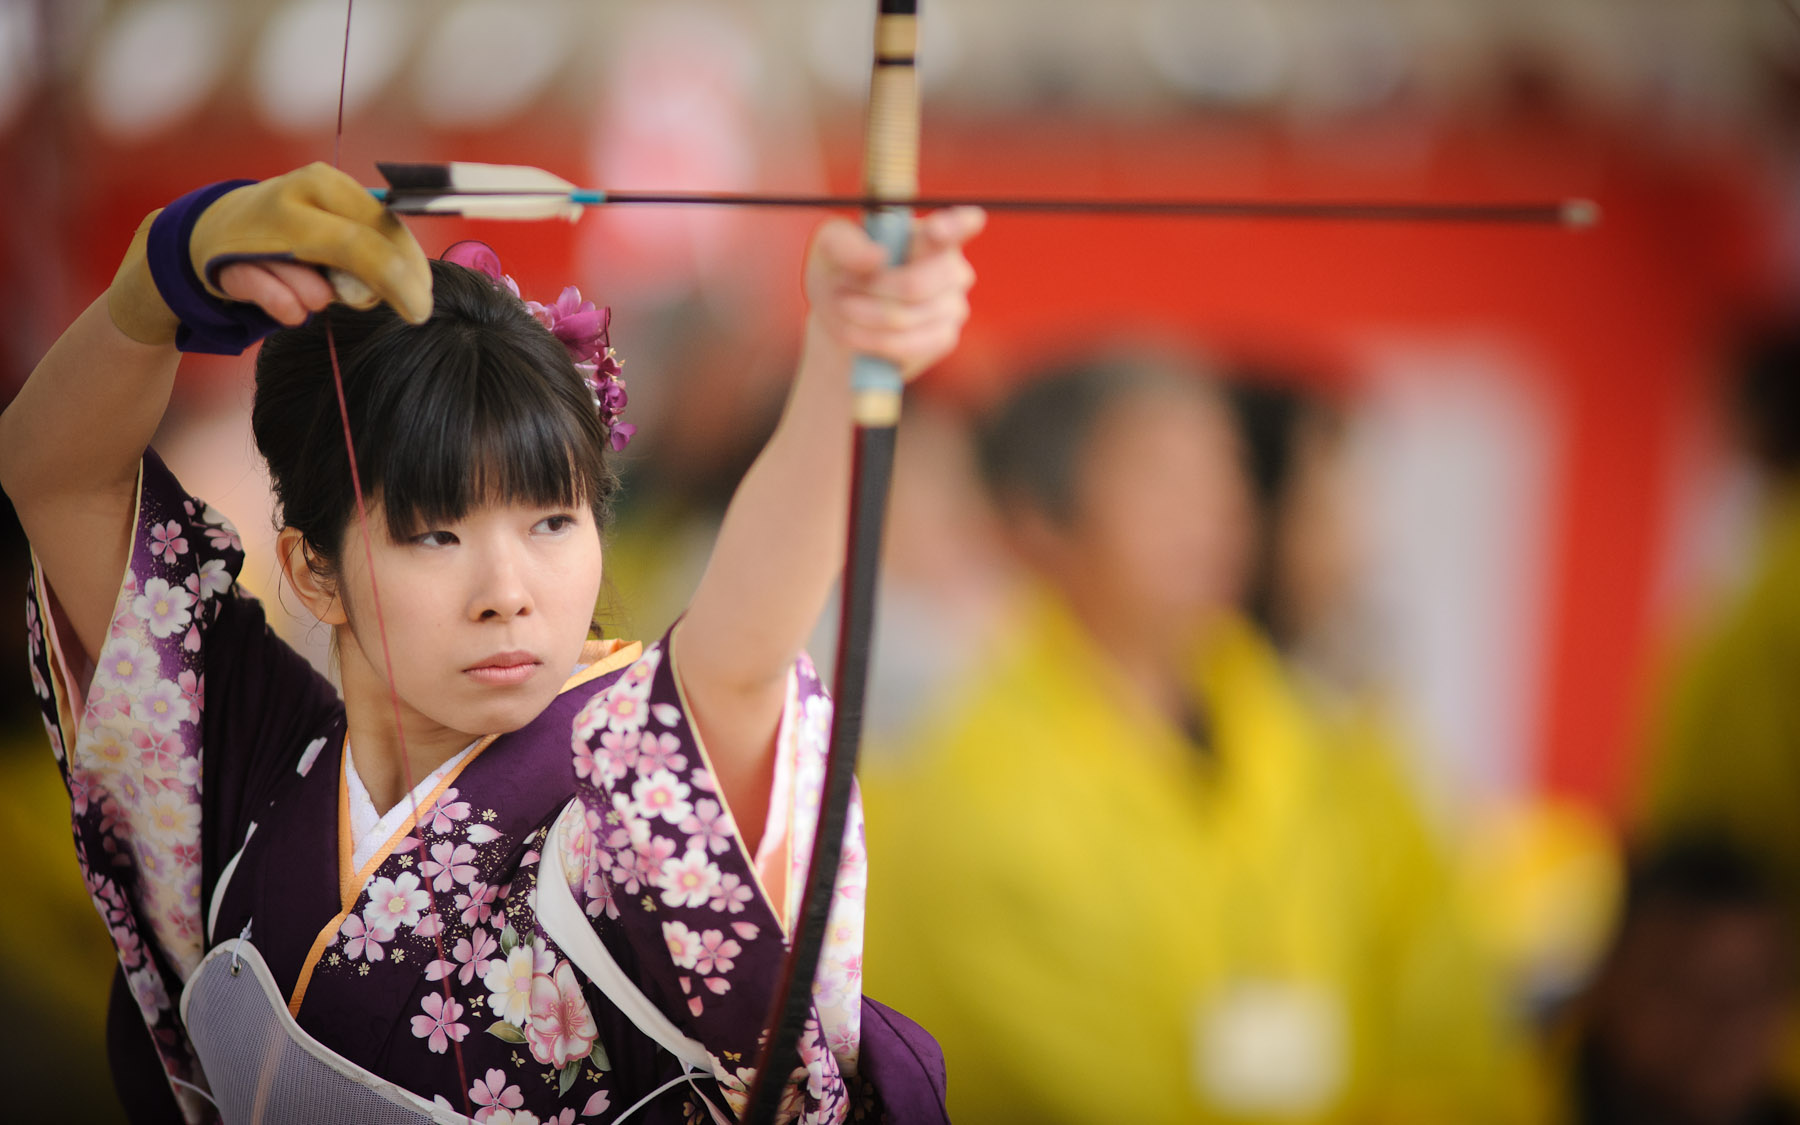 Jeffrey Friedl's Blog » Badass Japanese Archery: Now It’s The Ladies’ Turn